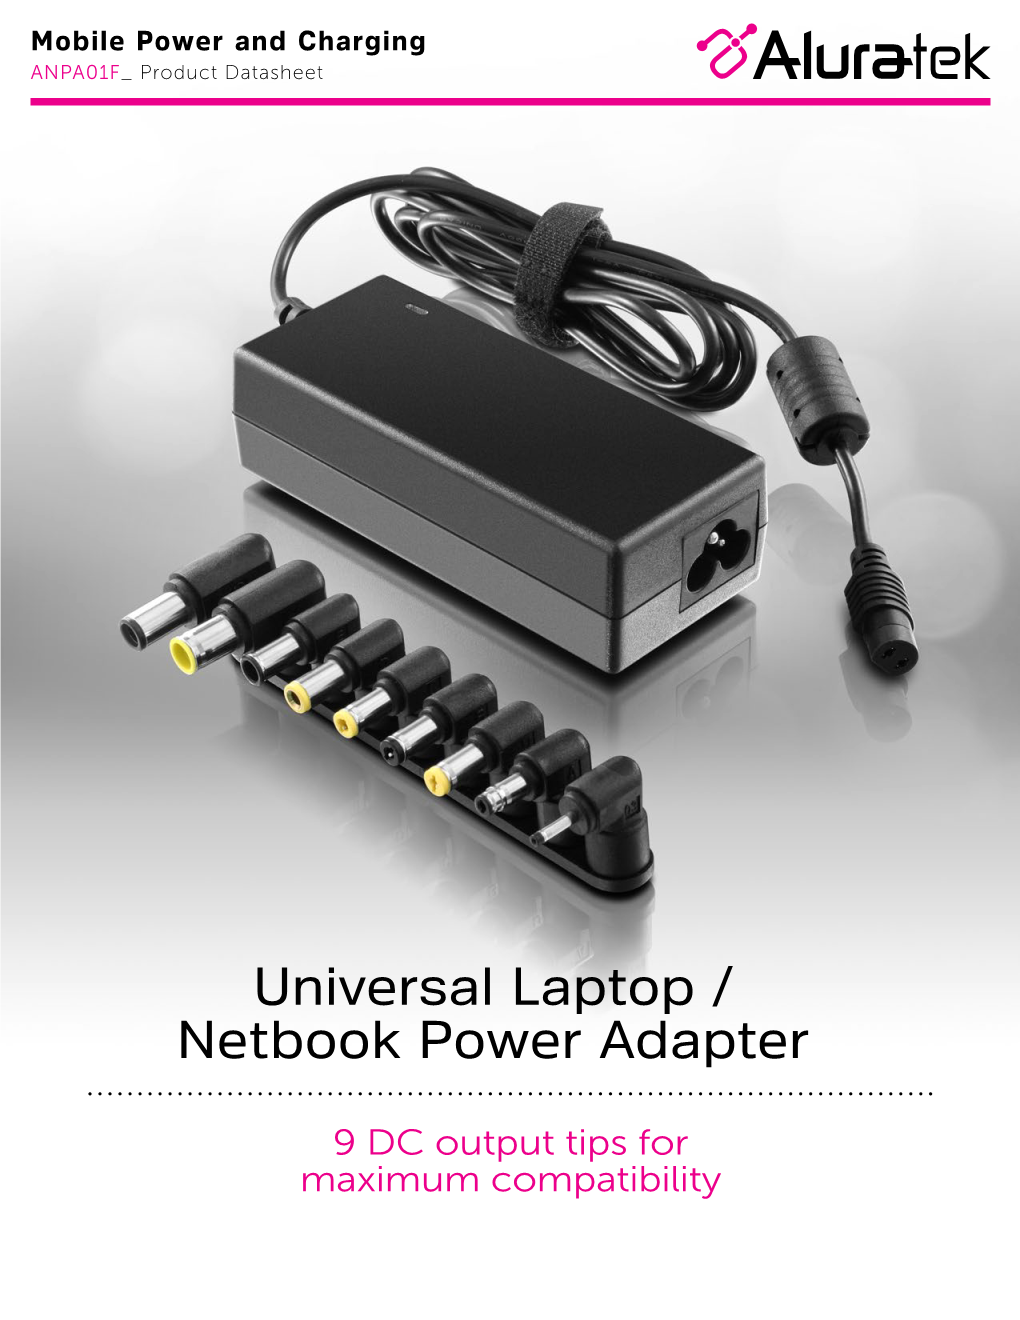 Universal Laptop / Netbook Power Adapter